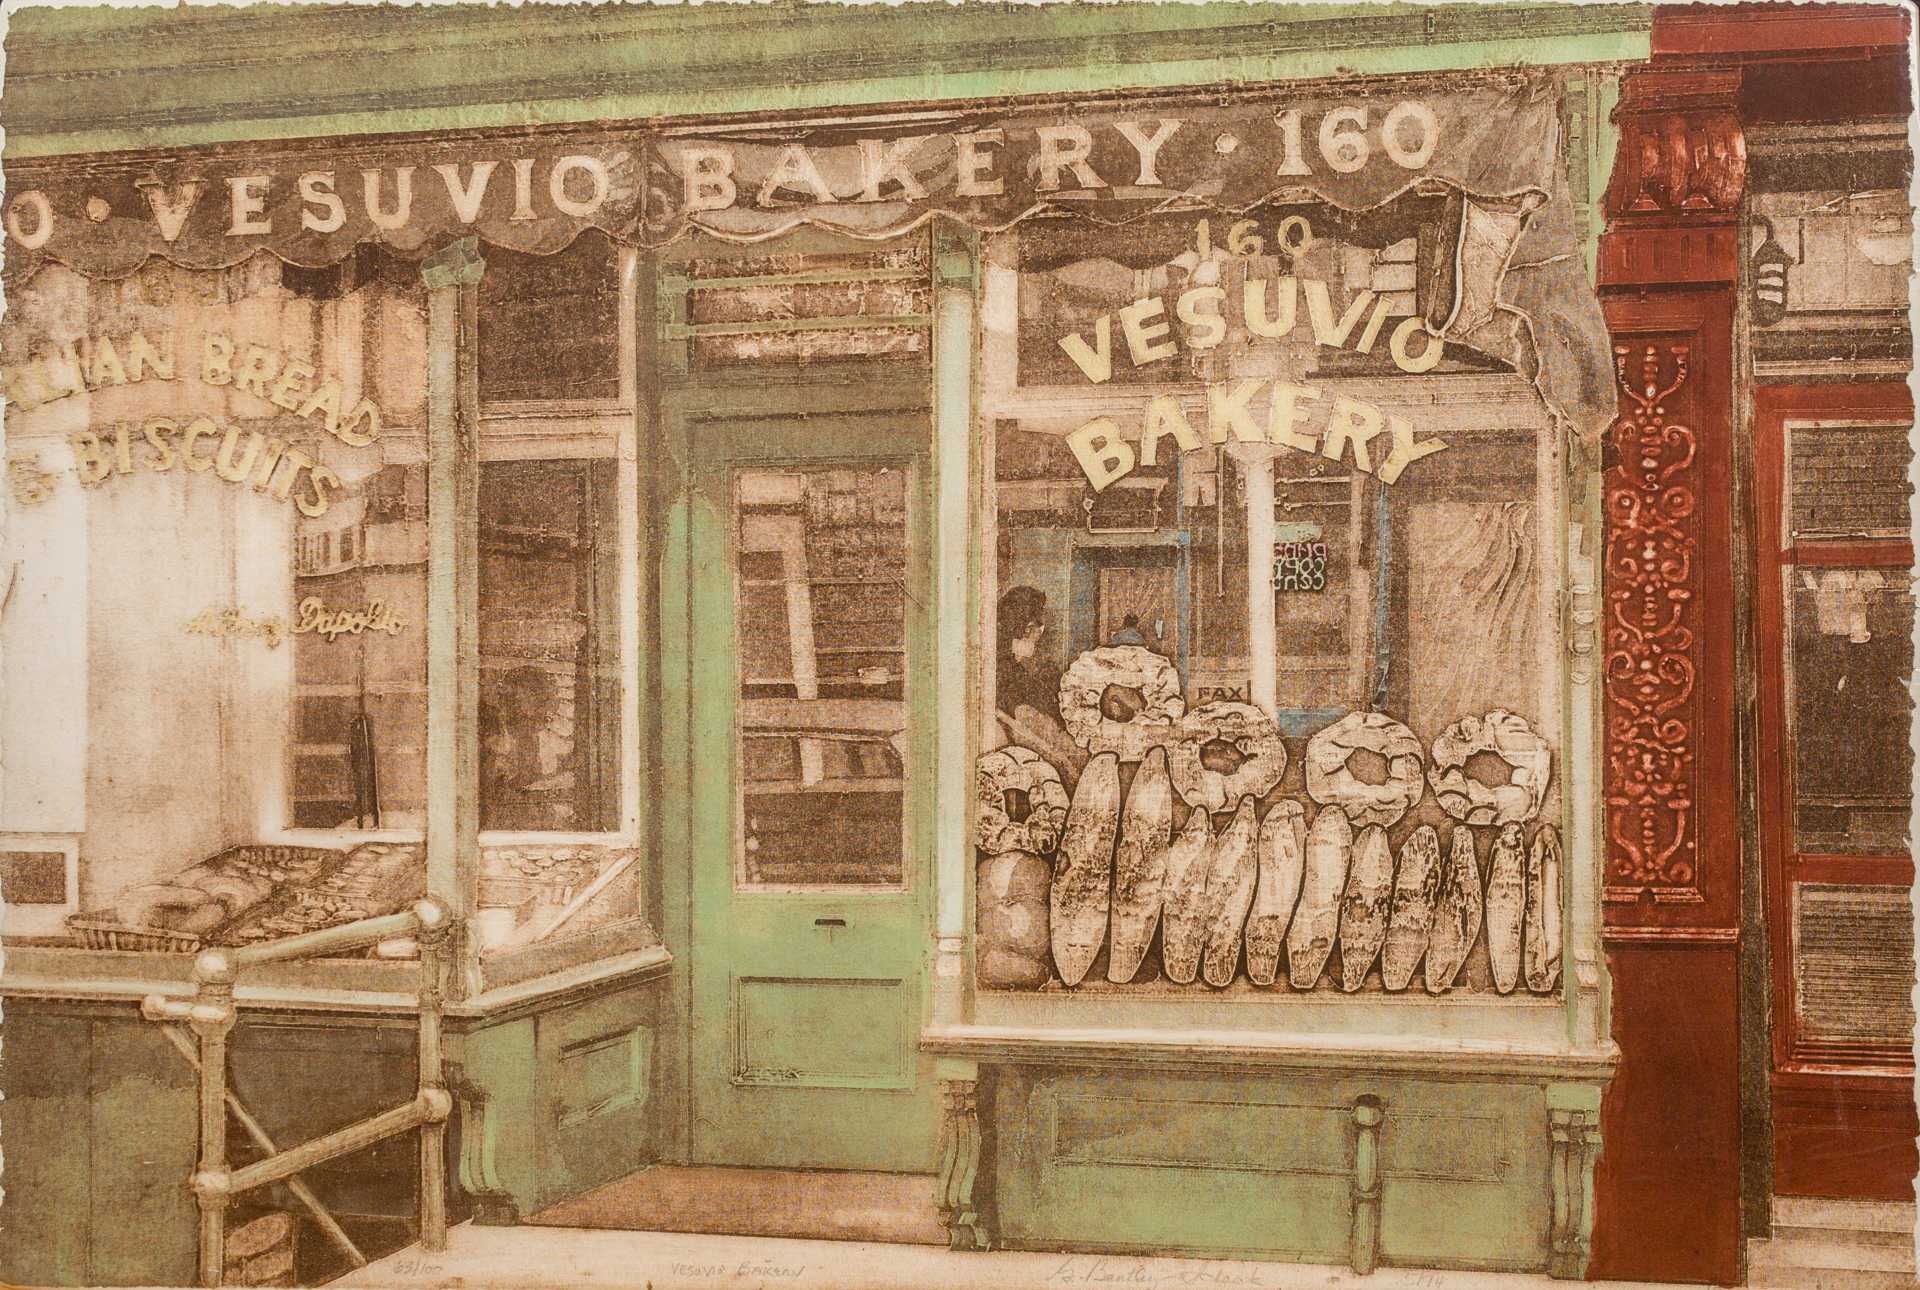 Vesuvio Bakery (2nd State) 63/100 by Grace Bentley-Scheck